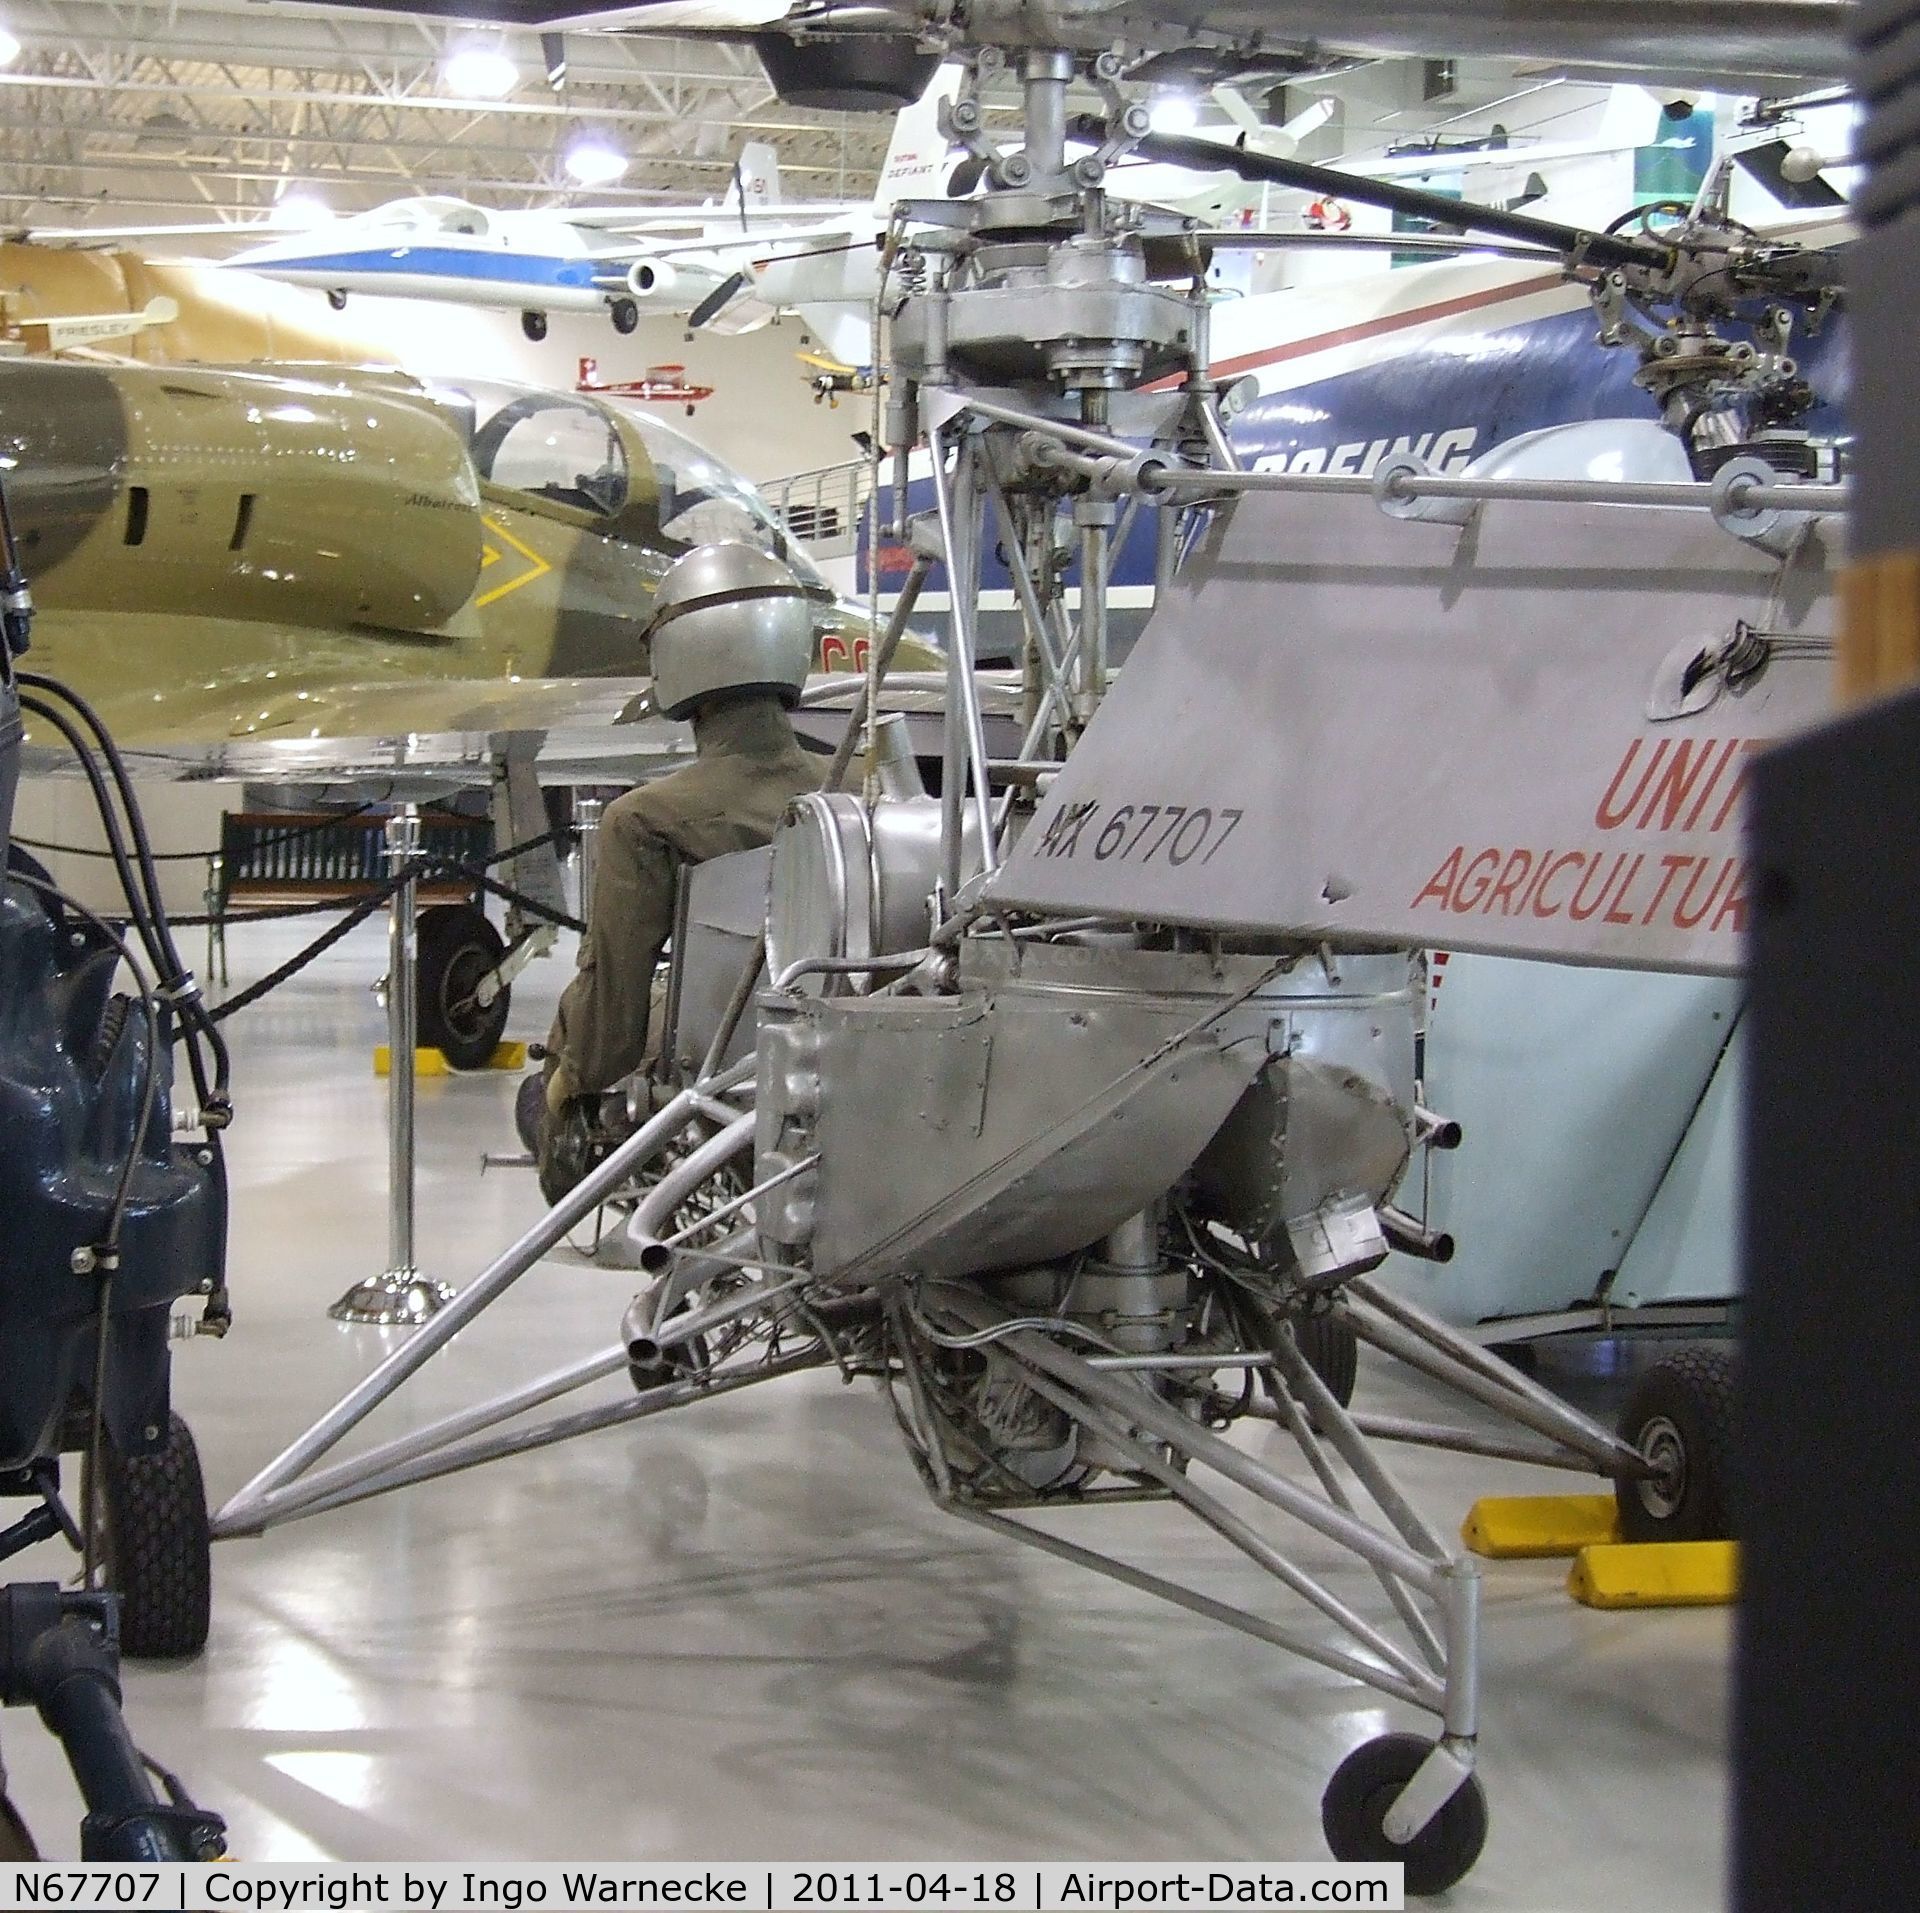 N67707, Hiller UH-5B C/N 01, Hiller UH-5B at the Hiller Aviation Museum, San Carlos CA